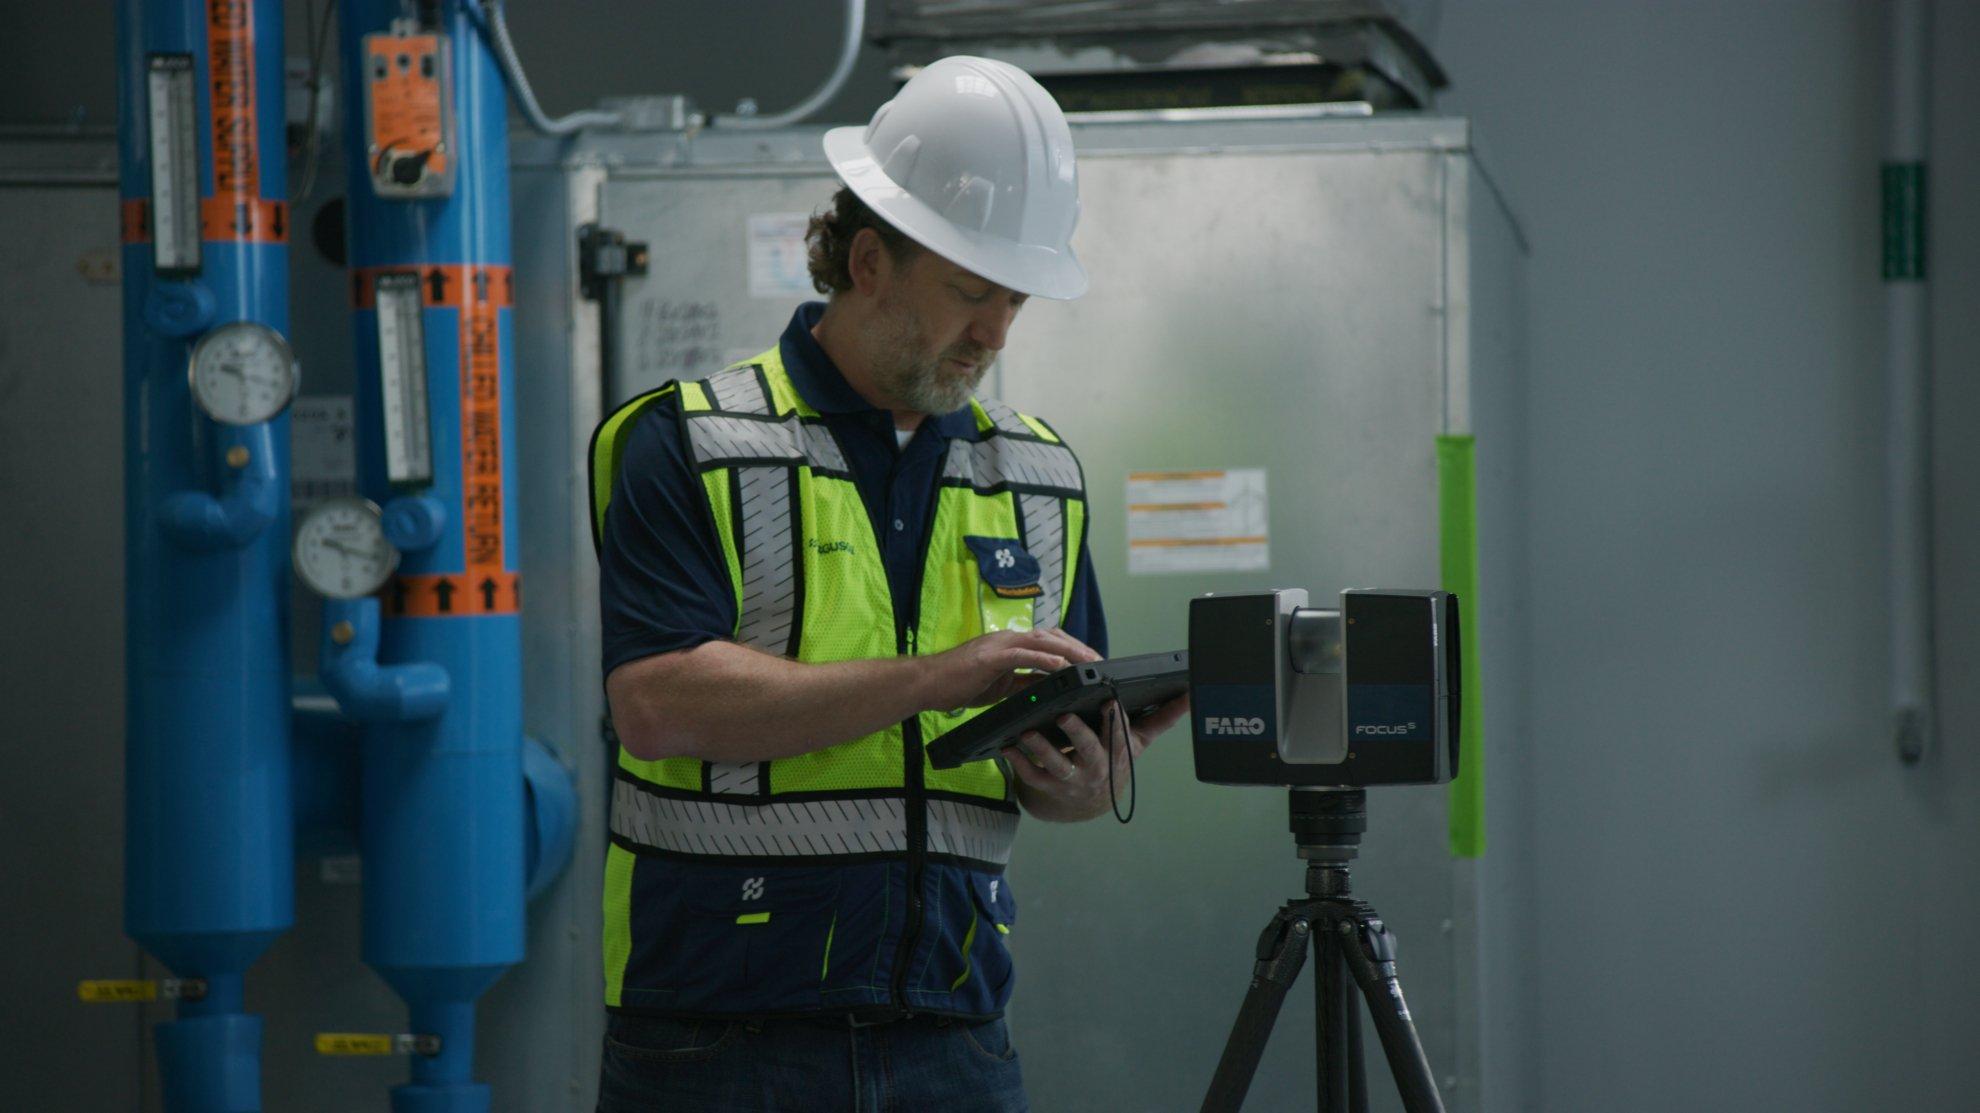 A Ferguson associate prepares the Faro 3D scanner in an industrial building.